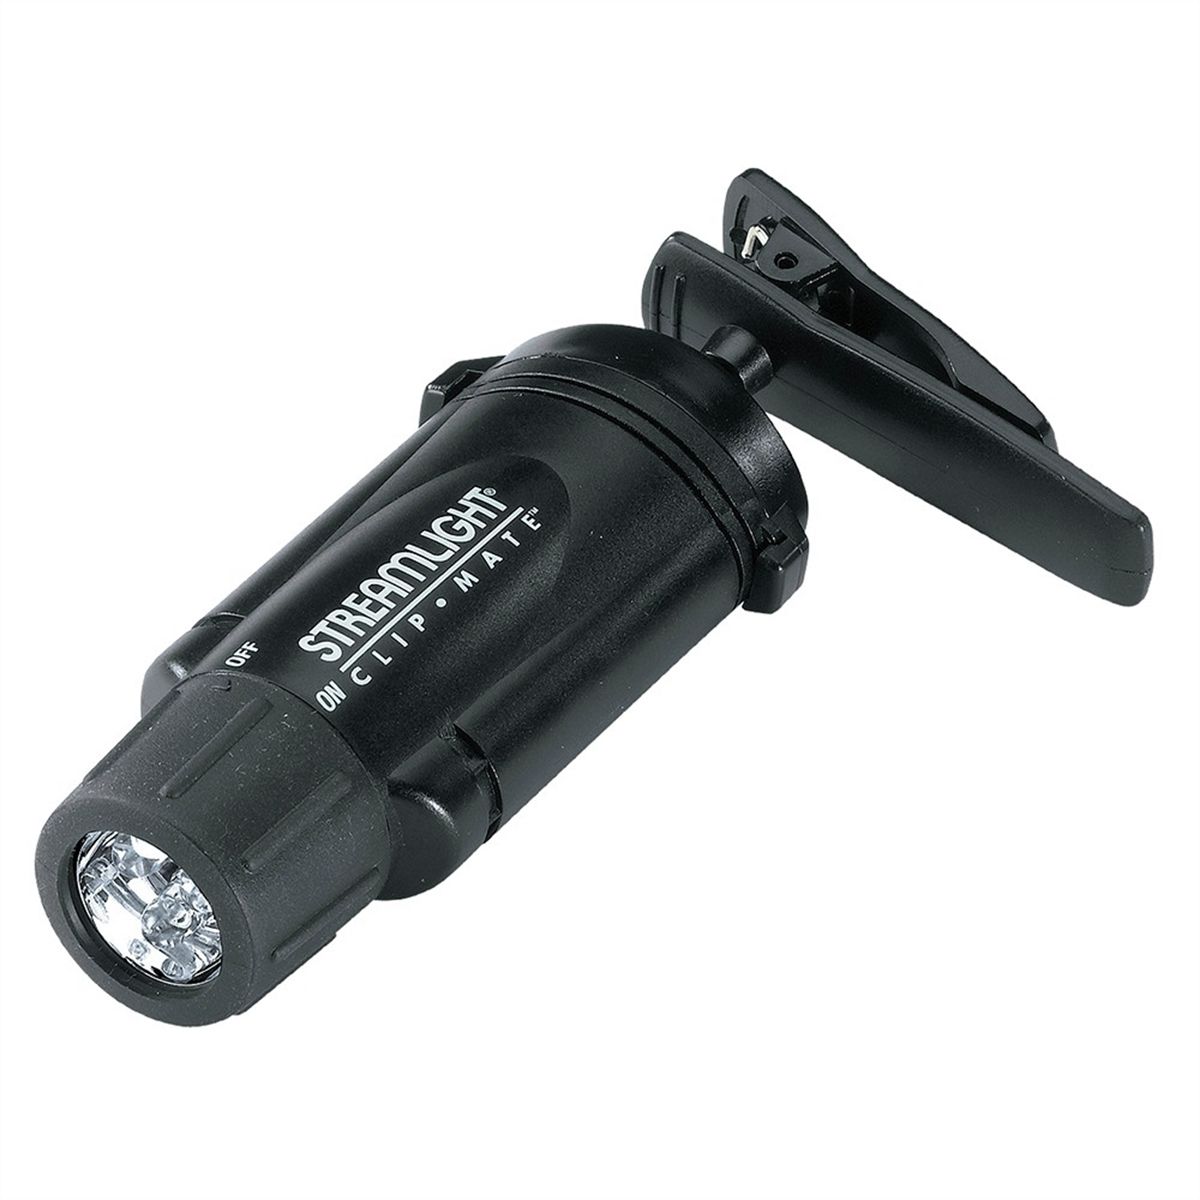 Clip-on LED Flashlight - Black / White LED